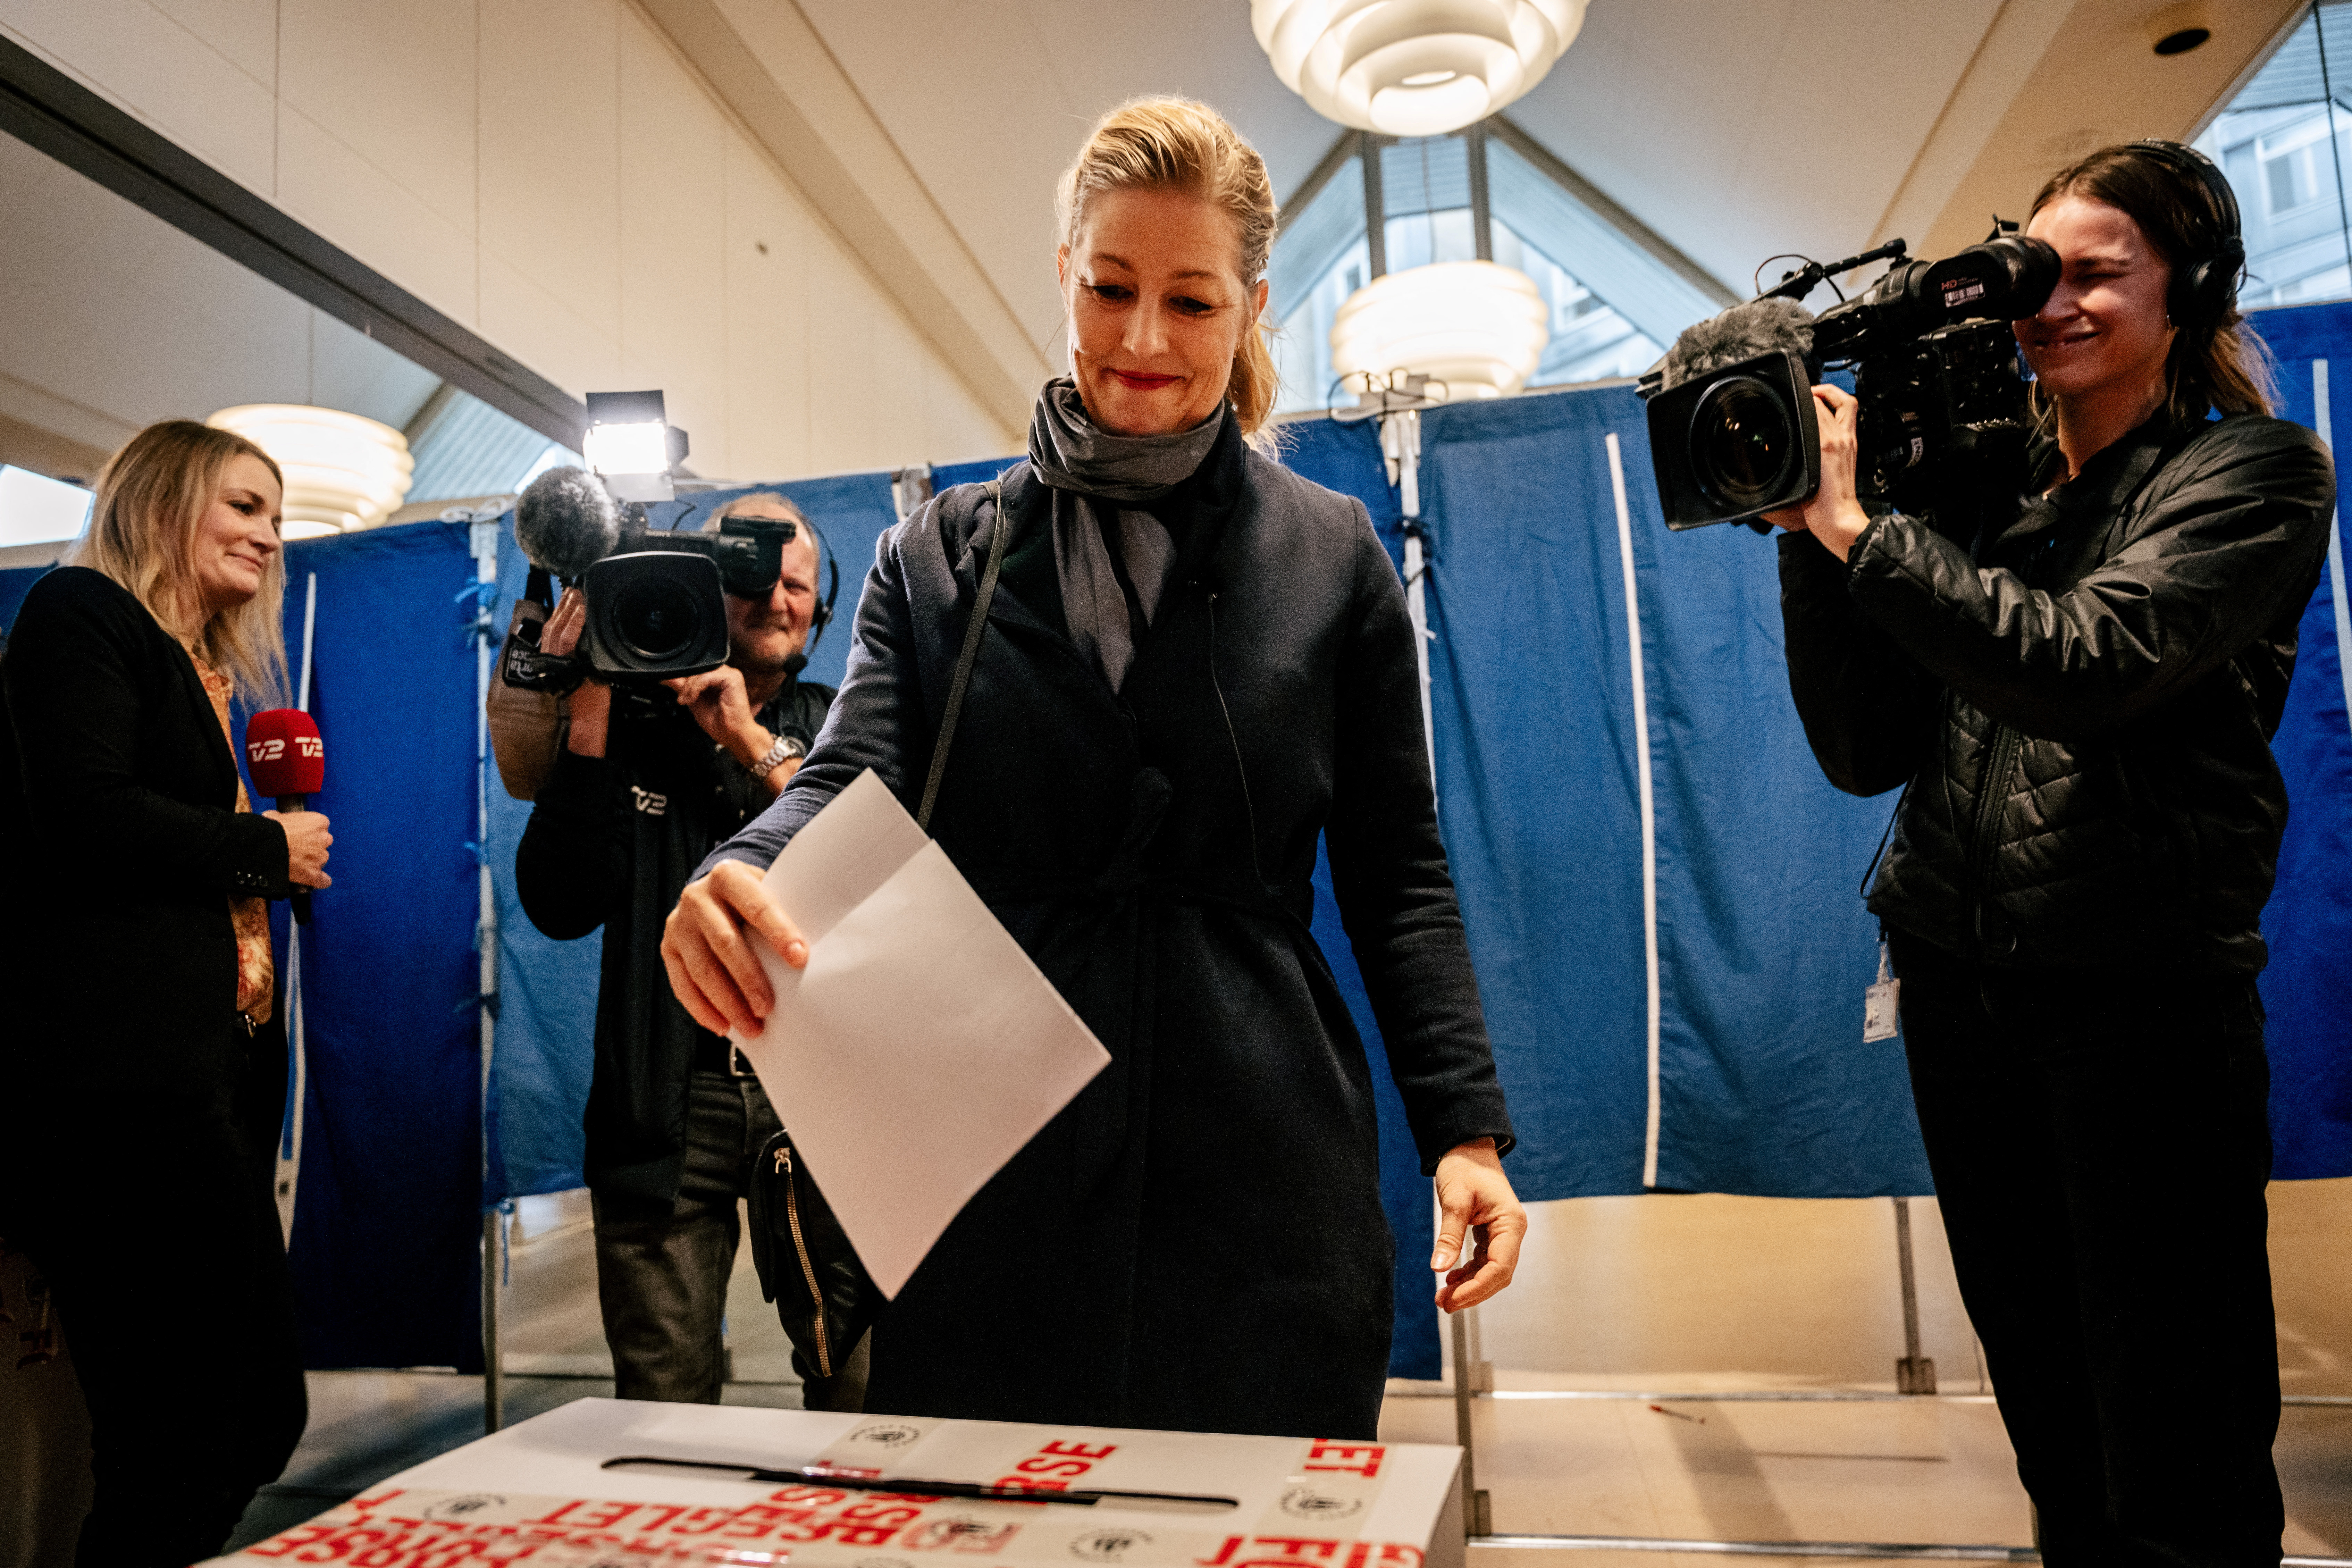 General election in Denmark